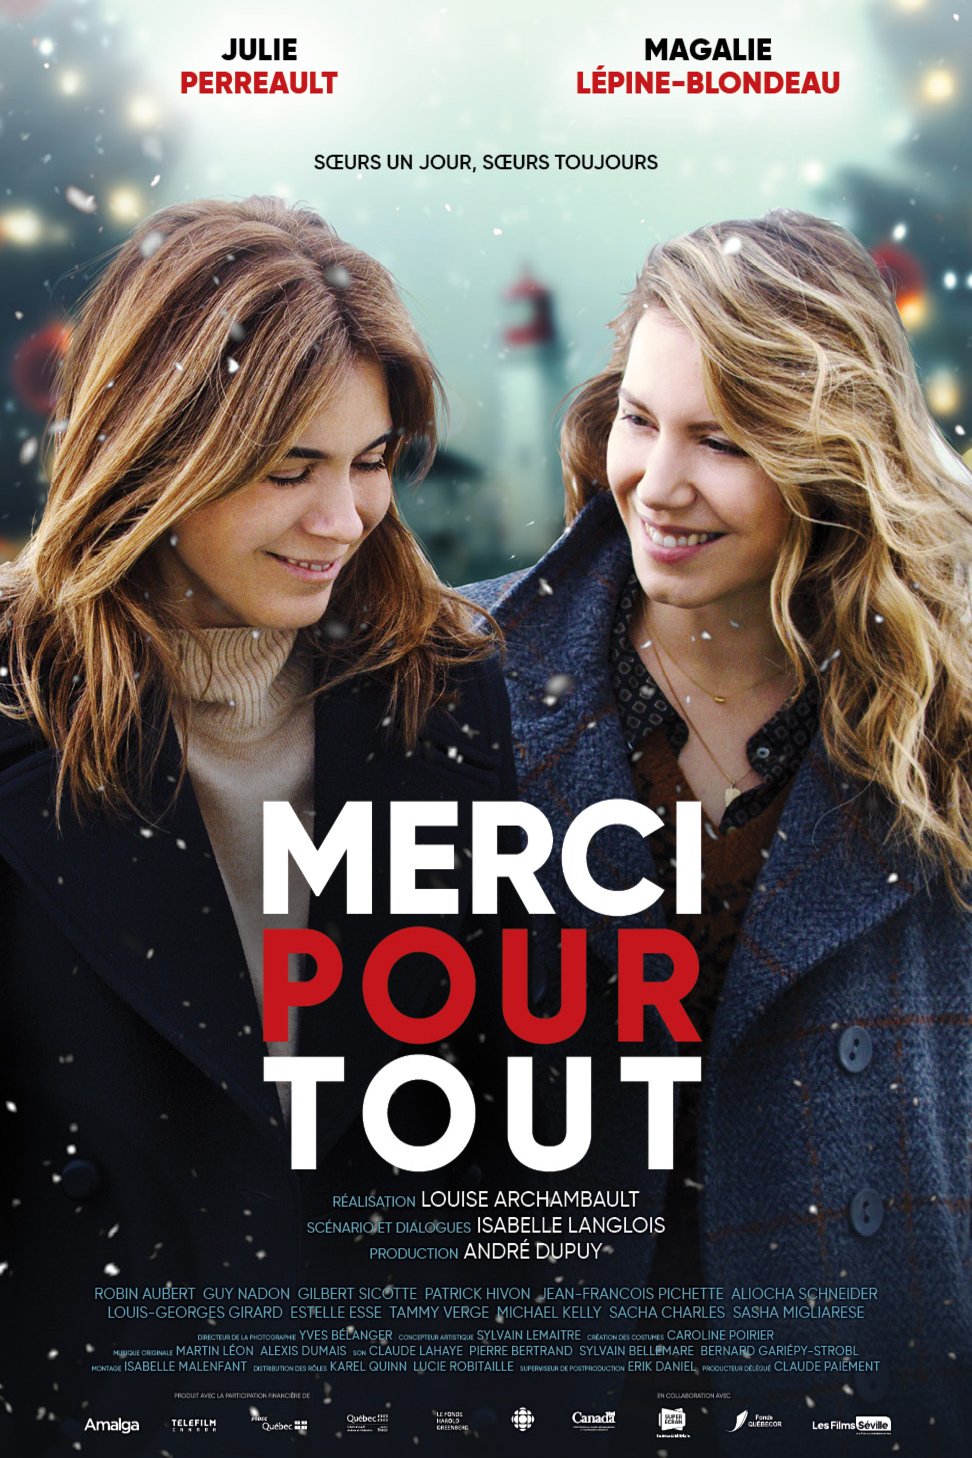 Poster of the movie Merci pour tout